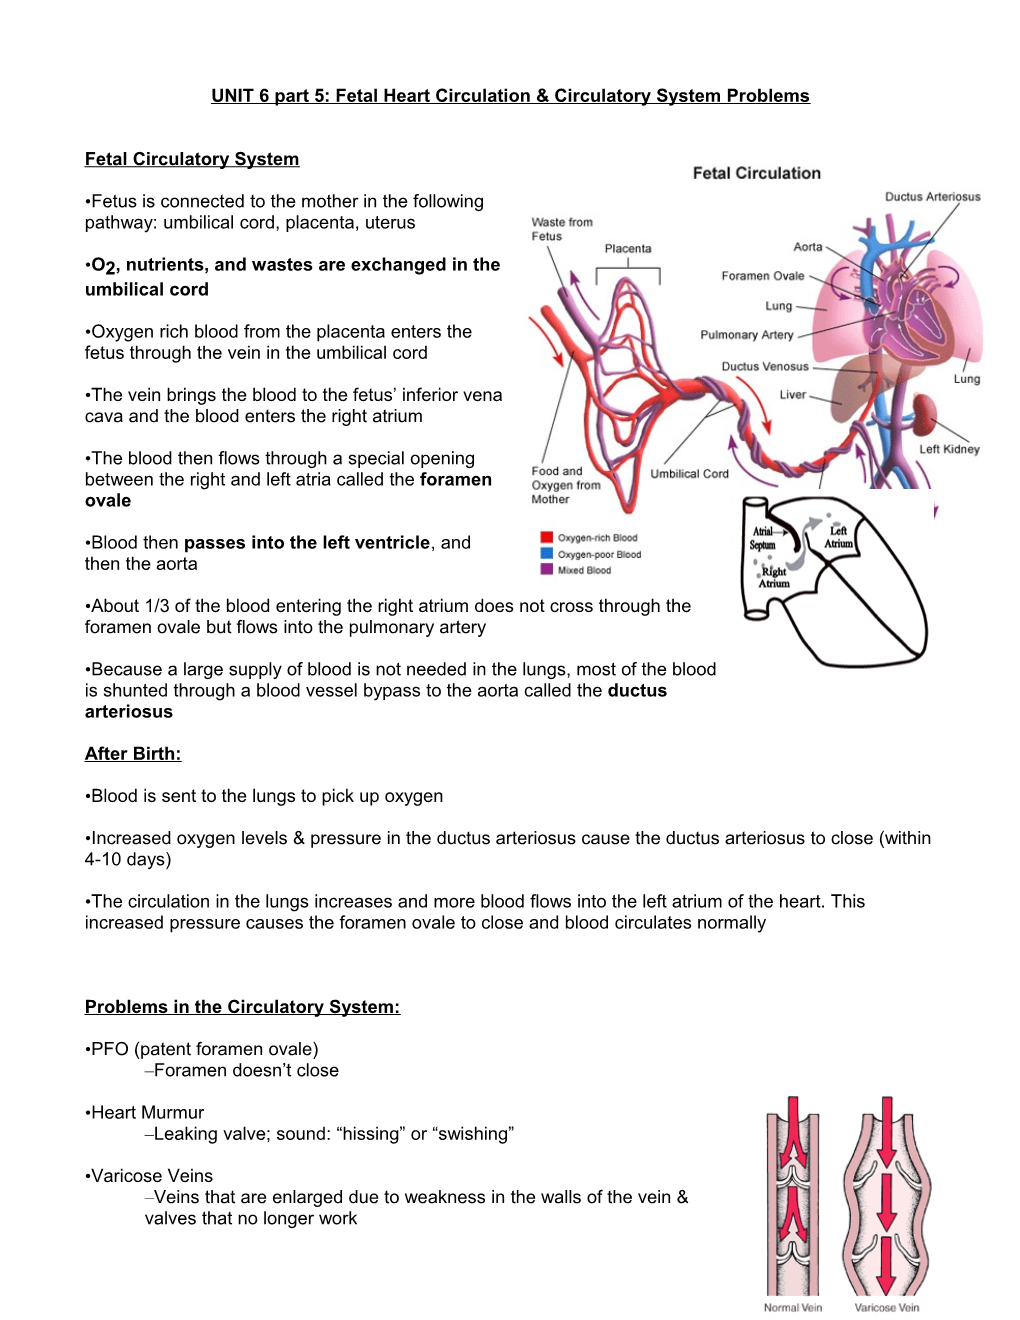 UNIT 6 Part 5: Fetal Heart Circulation & Circulatory System Problems